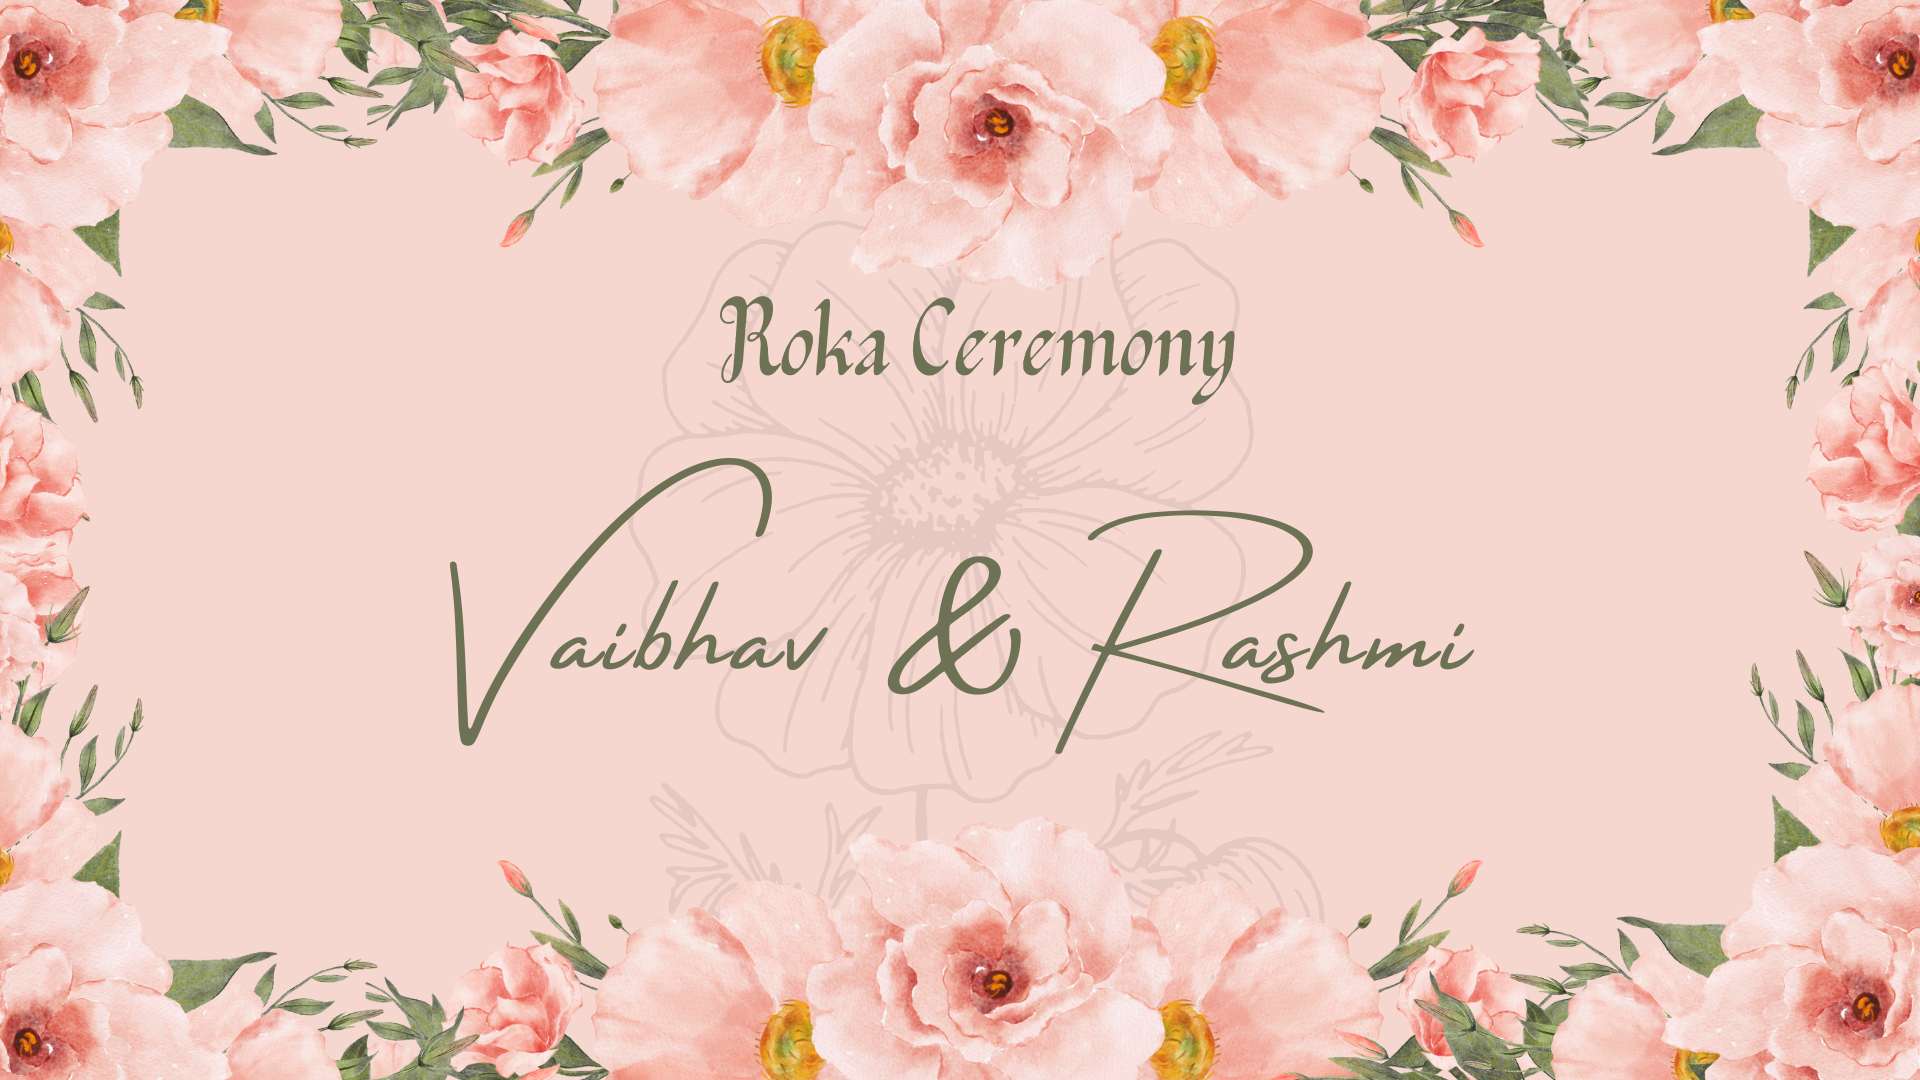 Video Roka ceremony card